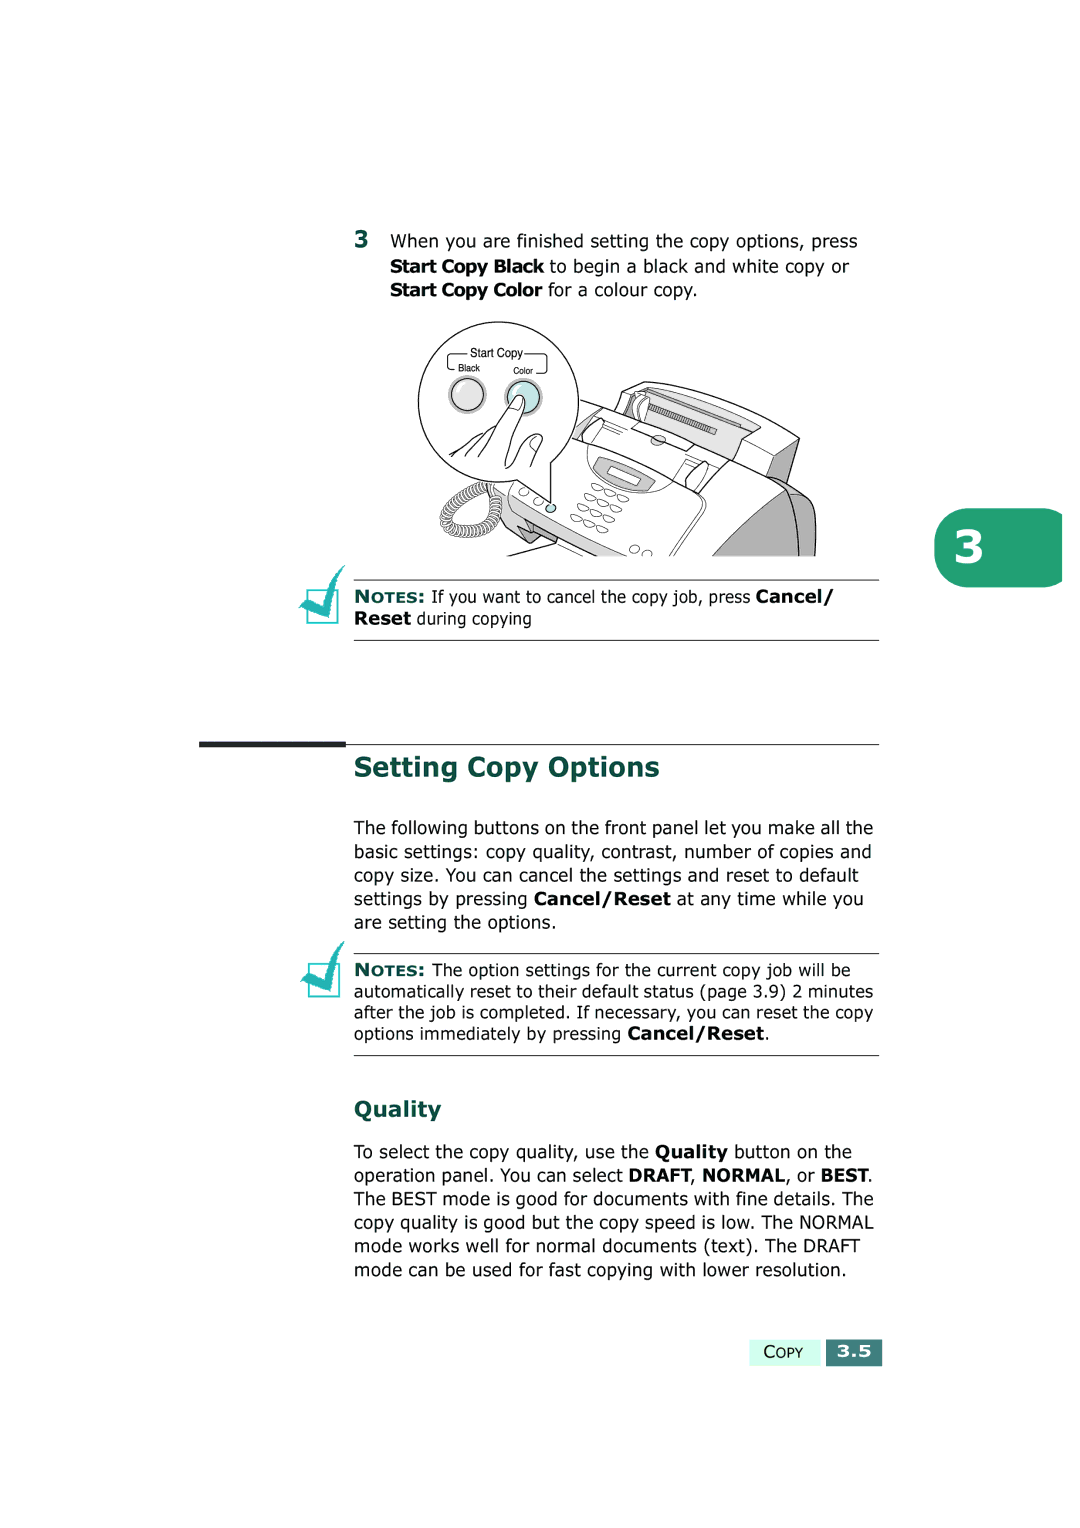 Samsung SF-430 manual Setting Copy Options, Quality 